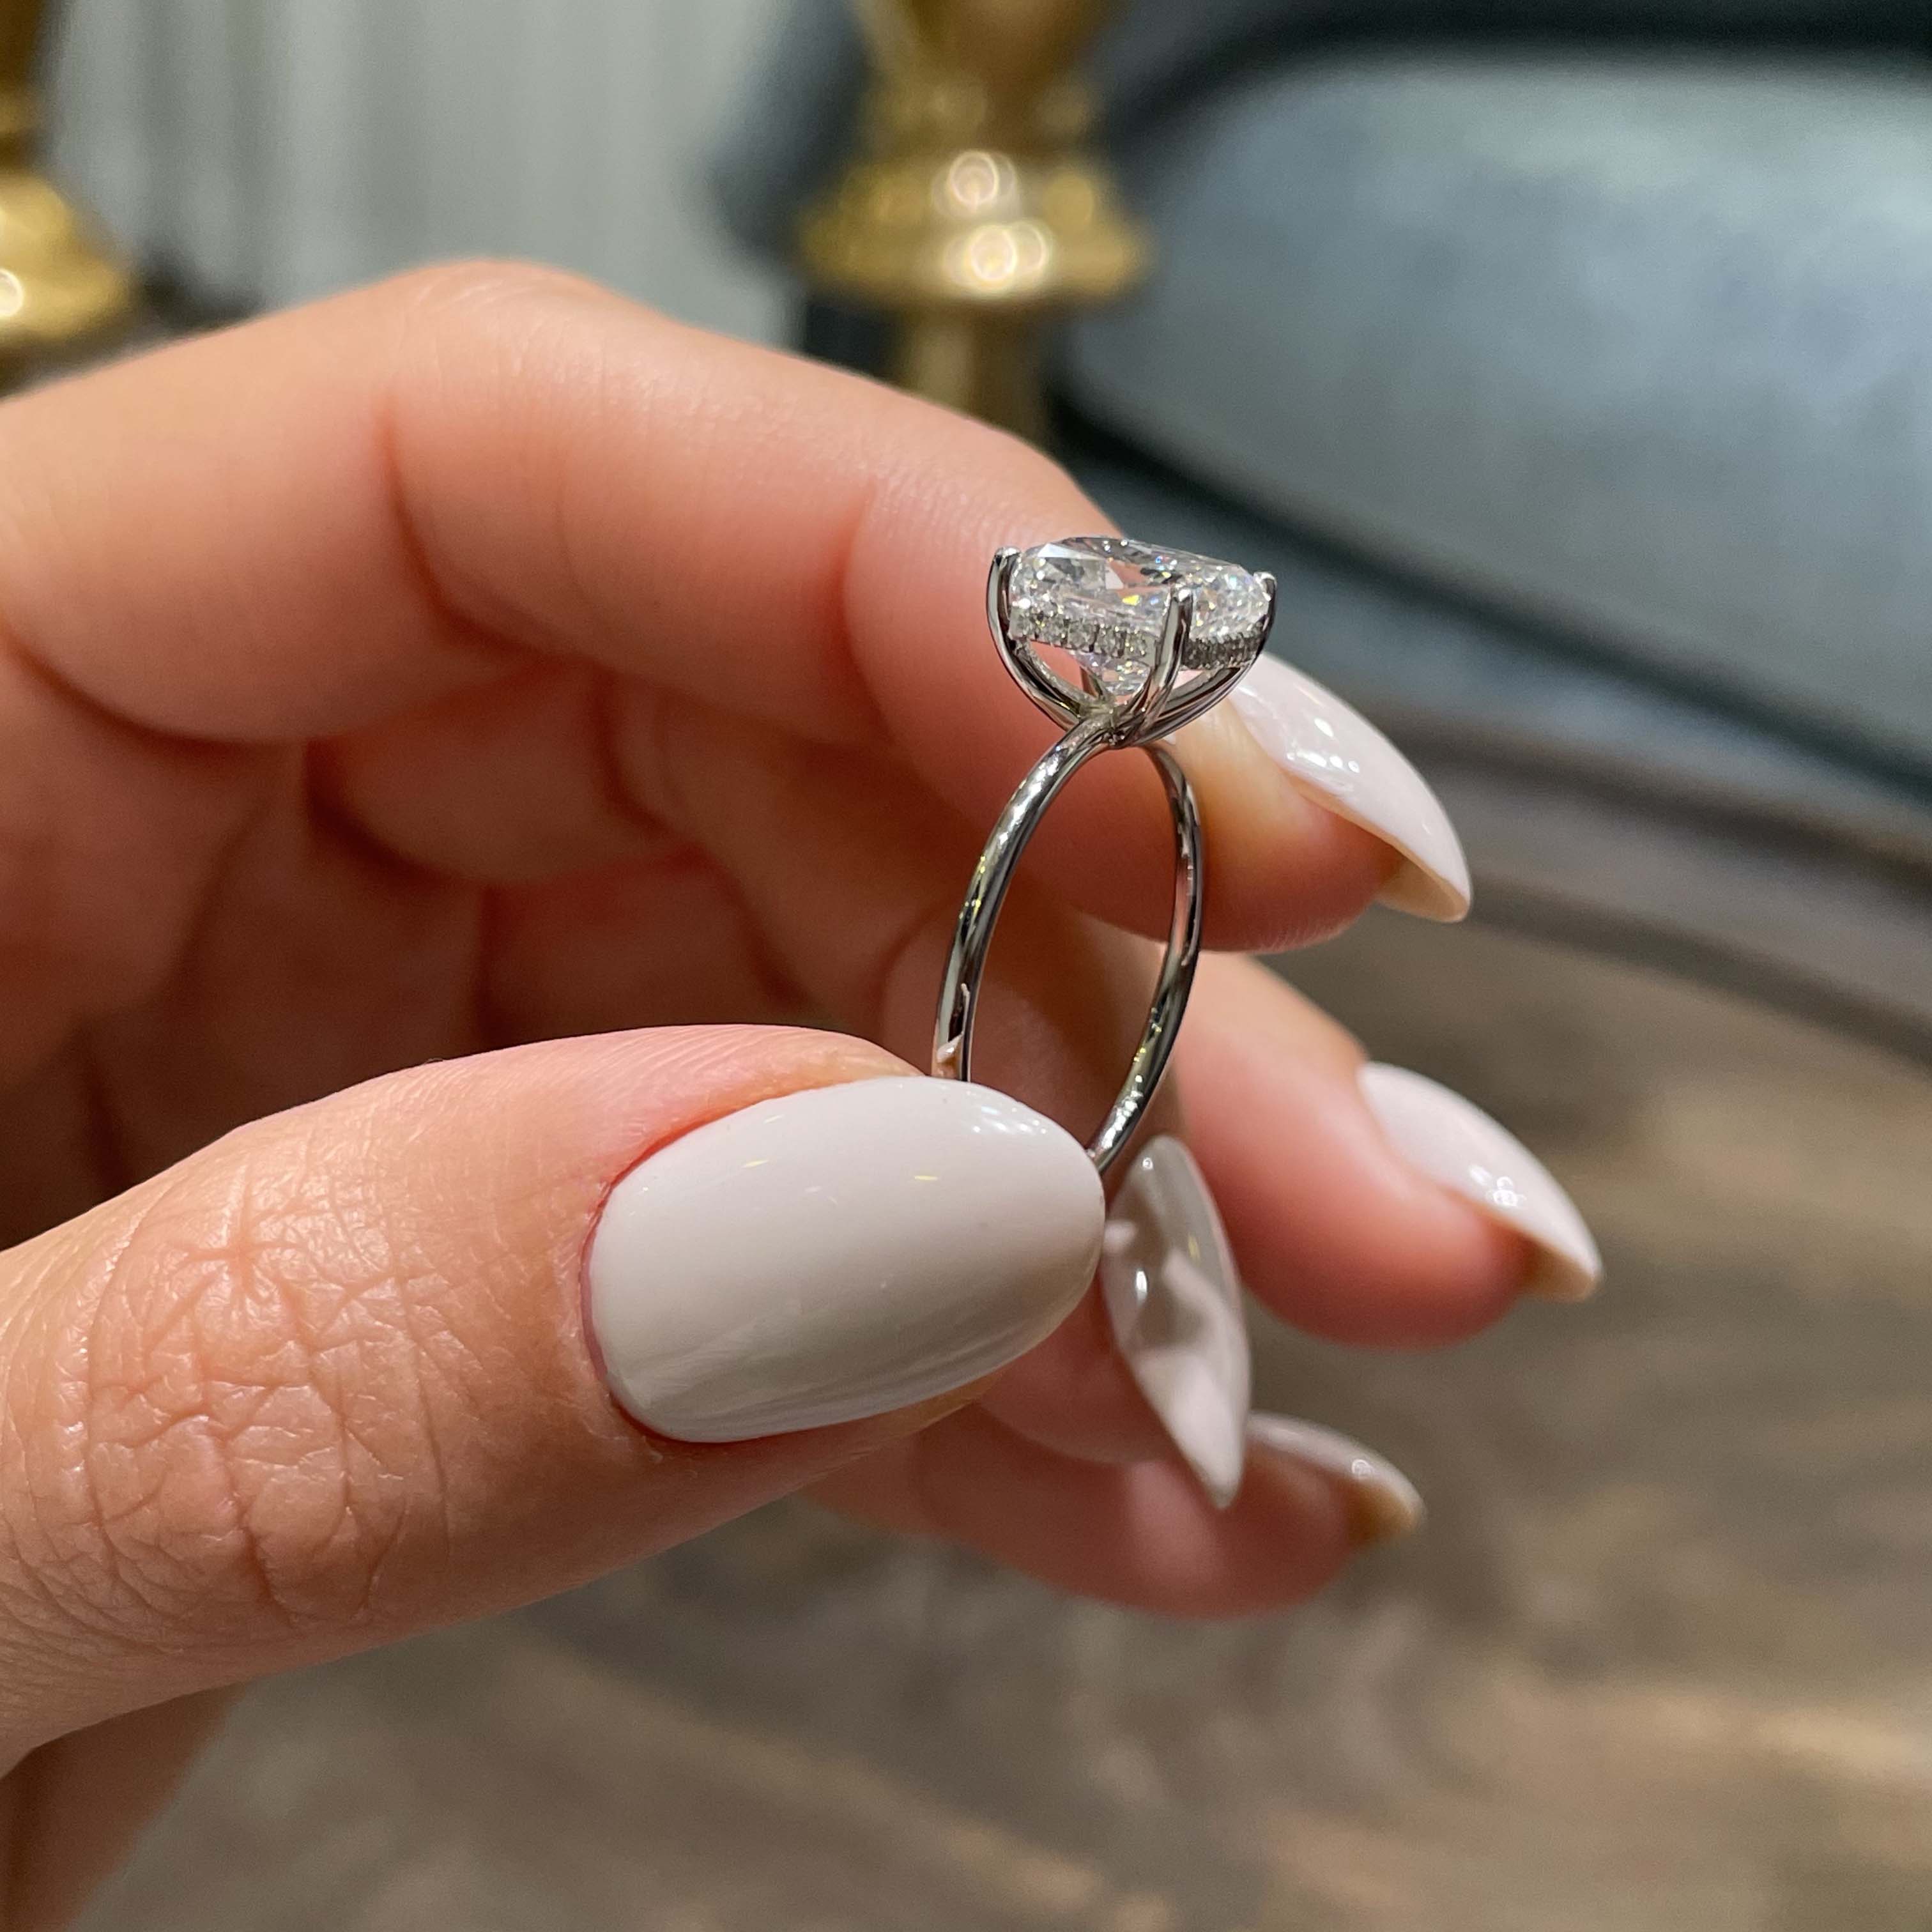 Priscilla Diamond Engagement Ring   (3.1 Carat) -14K White Gold